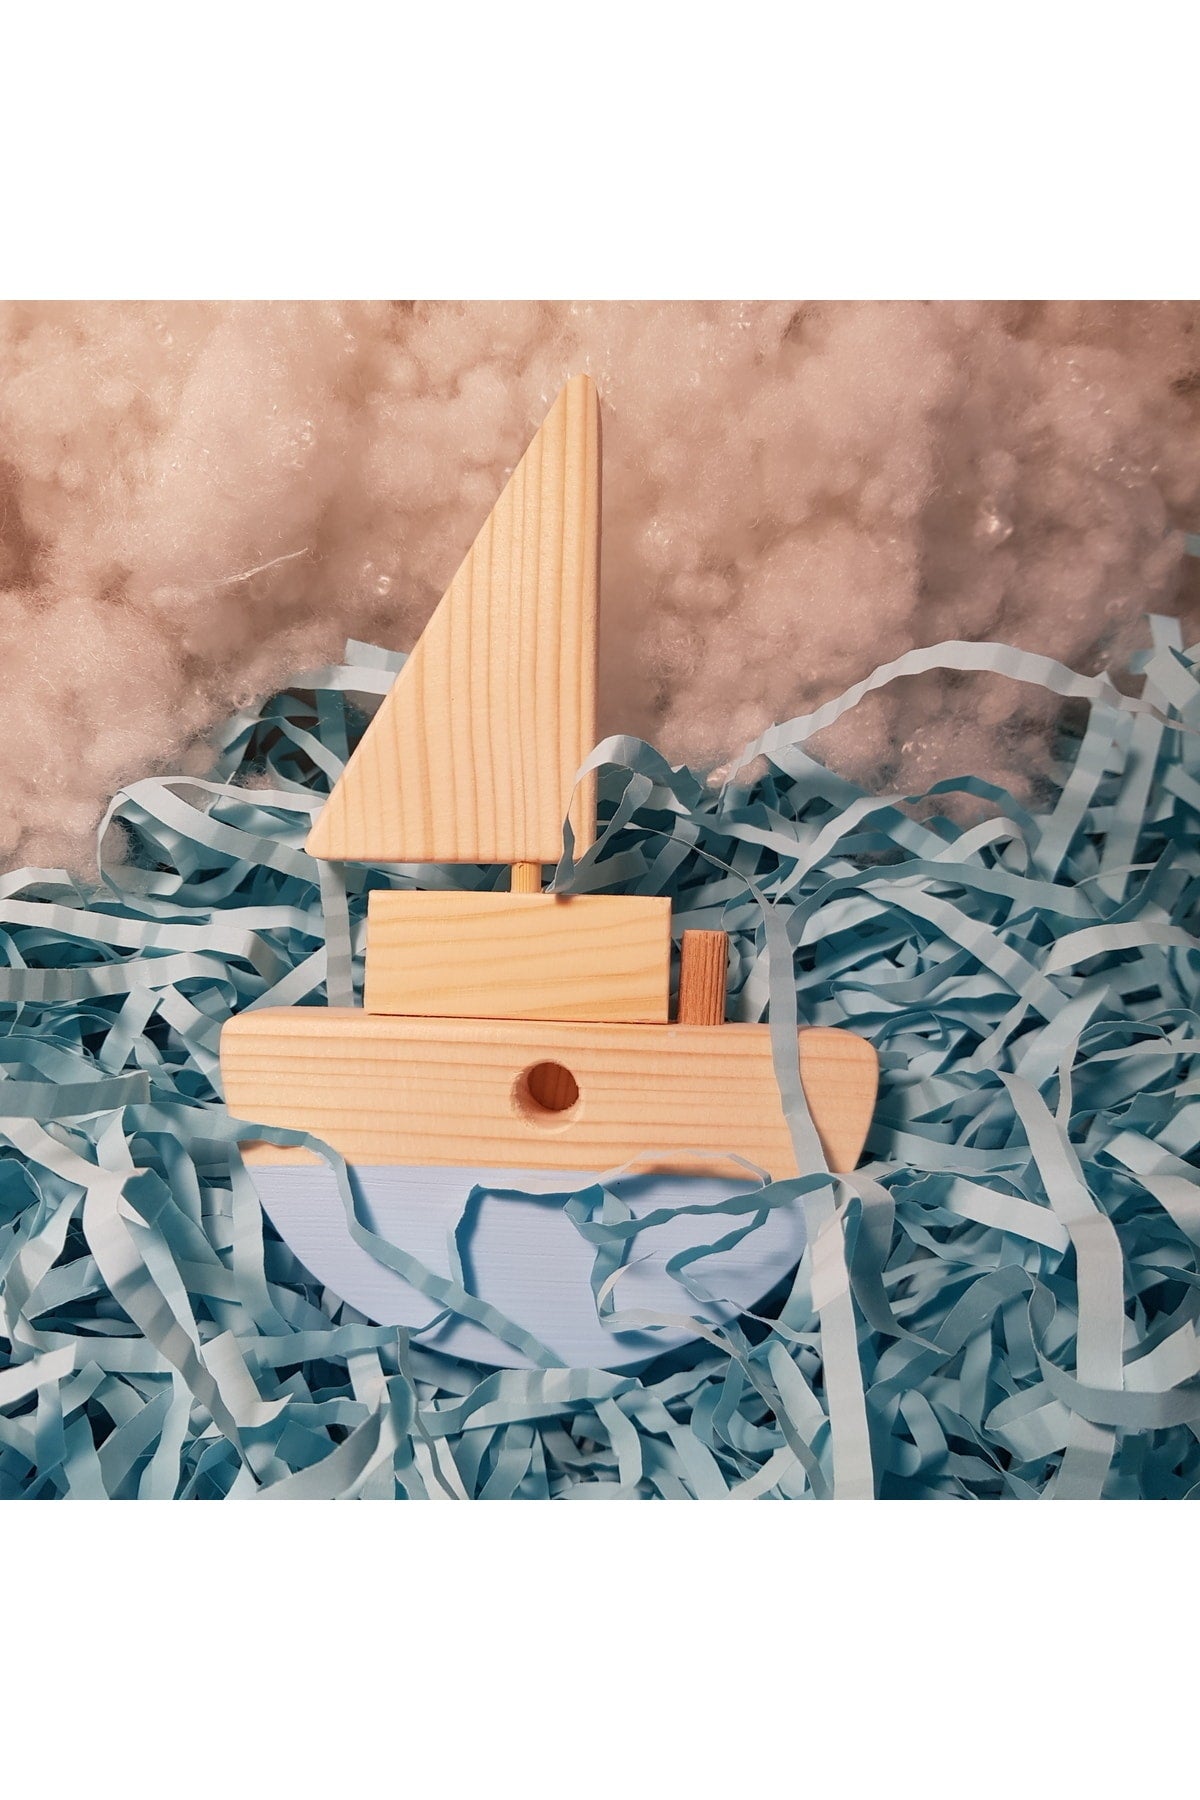 Handmade Wooden Toy Baby Ship Children's Imagination Gift Toy